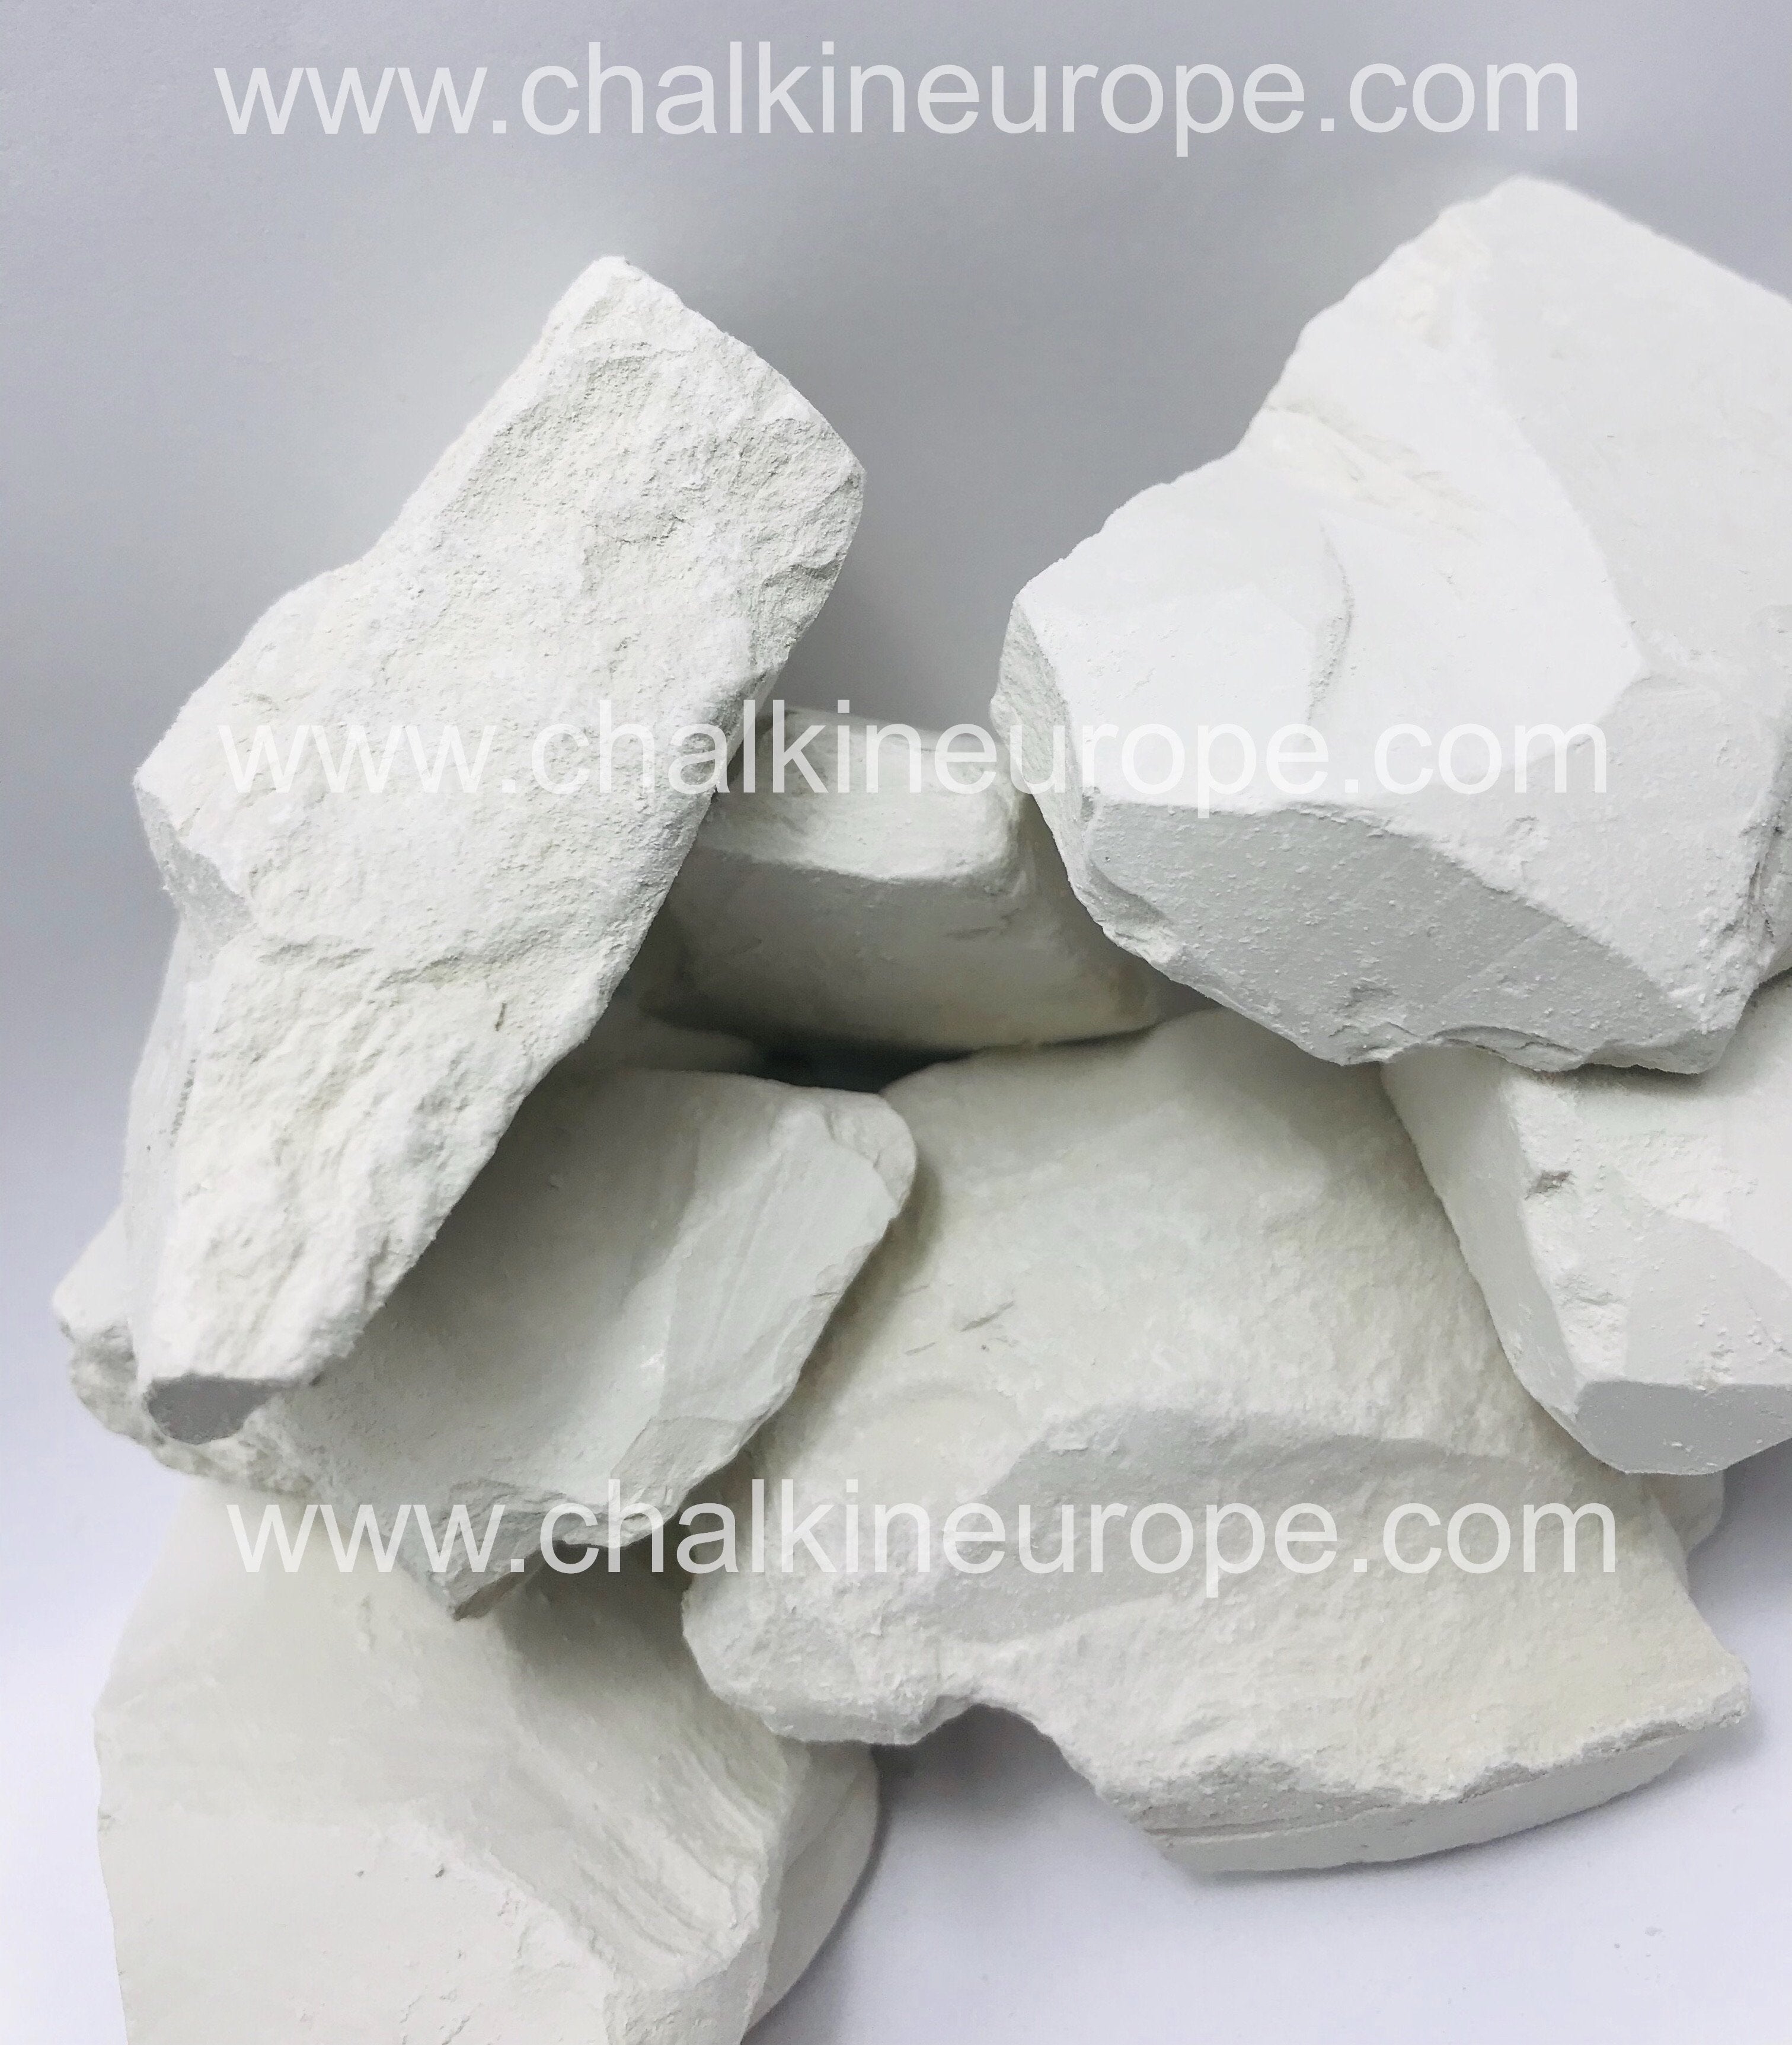 White Edible Clay Chunks Natural for Eating, Edible Algeria